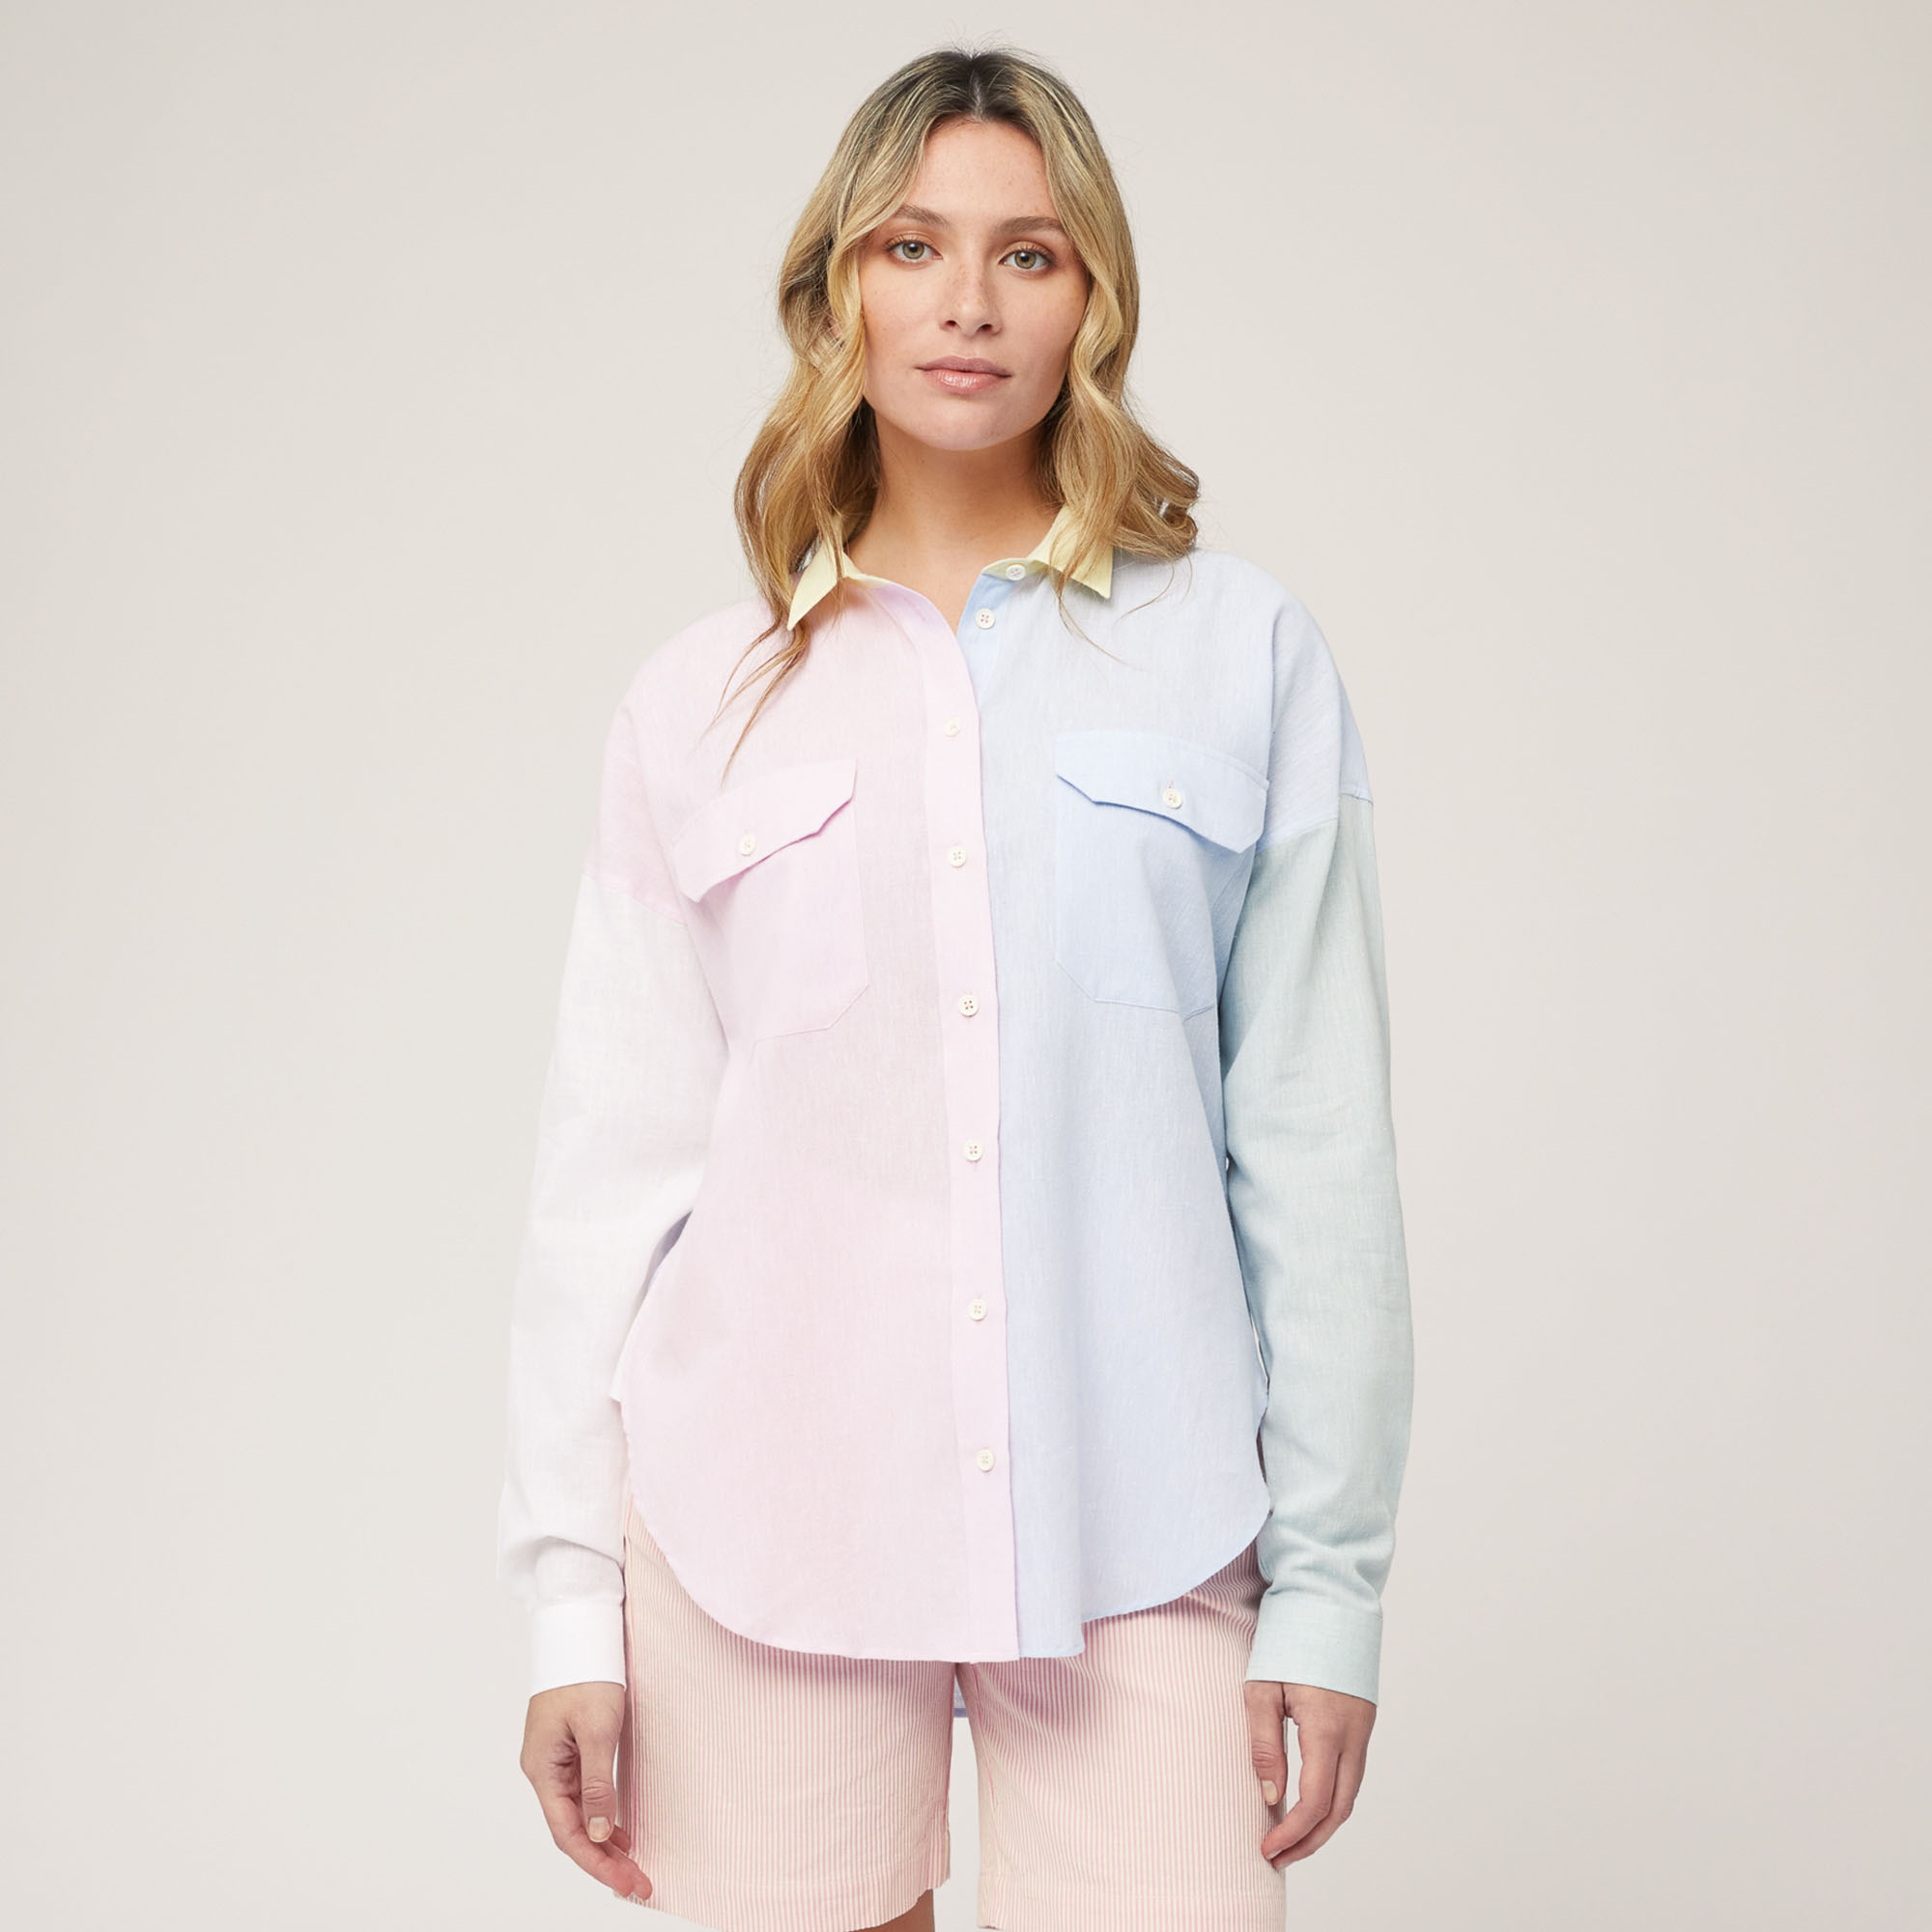 Cotton and Linen Sorbet Shirt, Light Blue, large